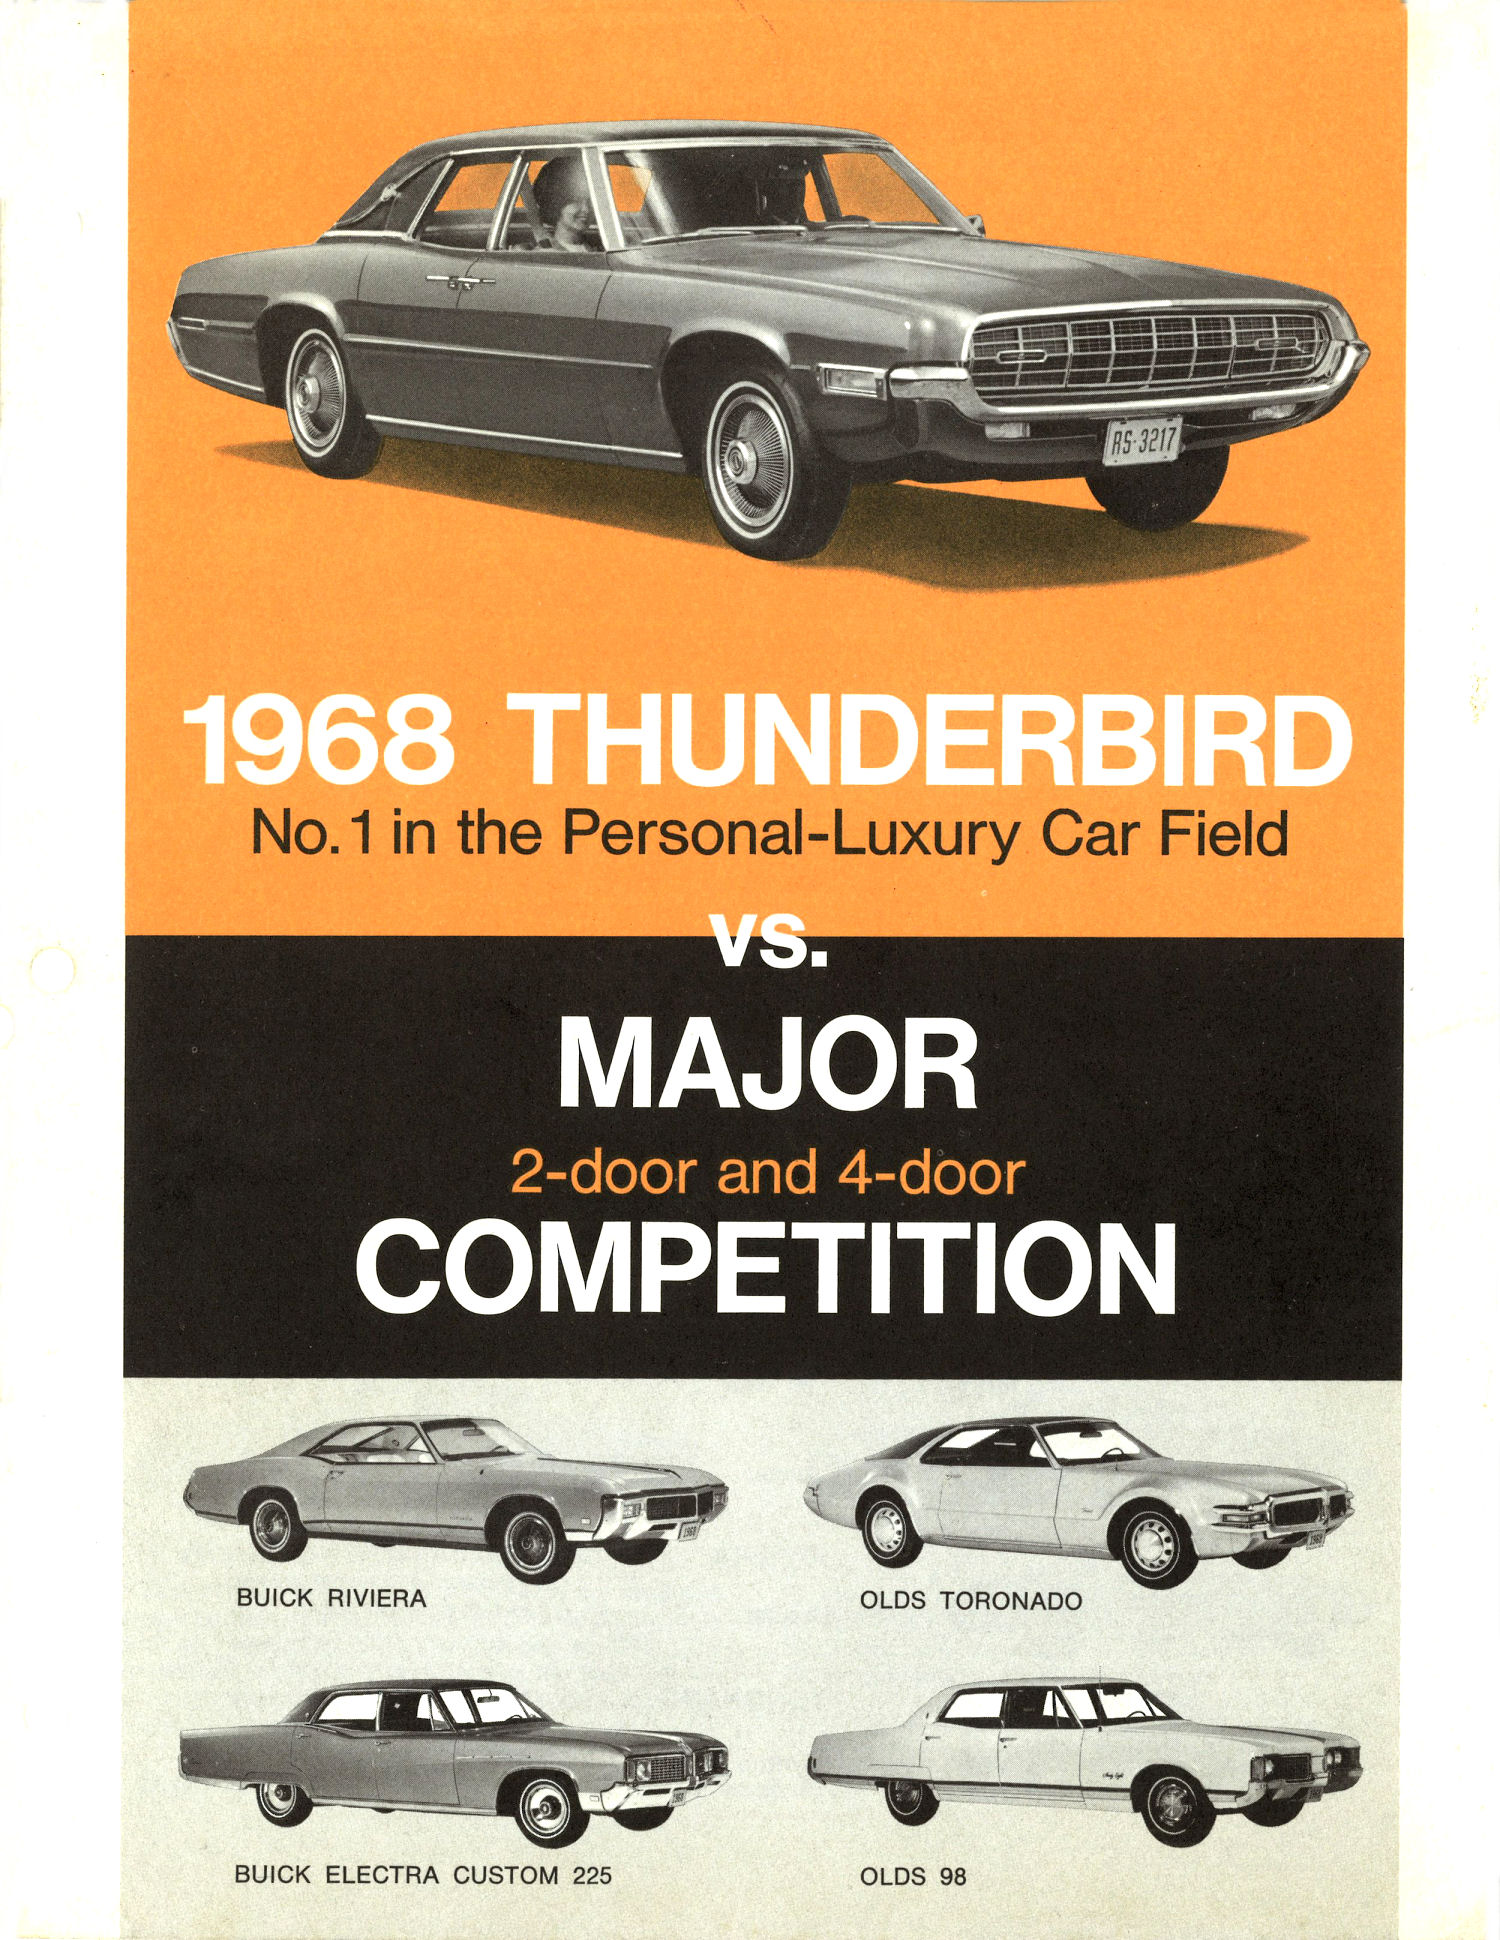 1968_Thunderbird_vs_Competition-01